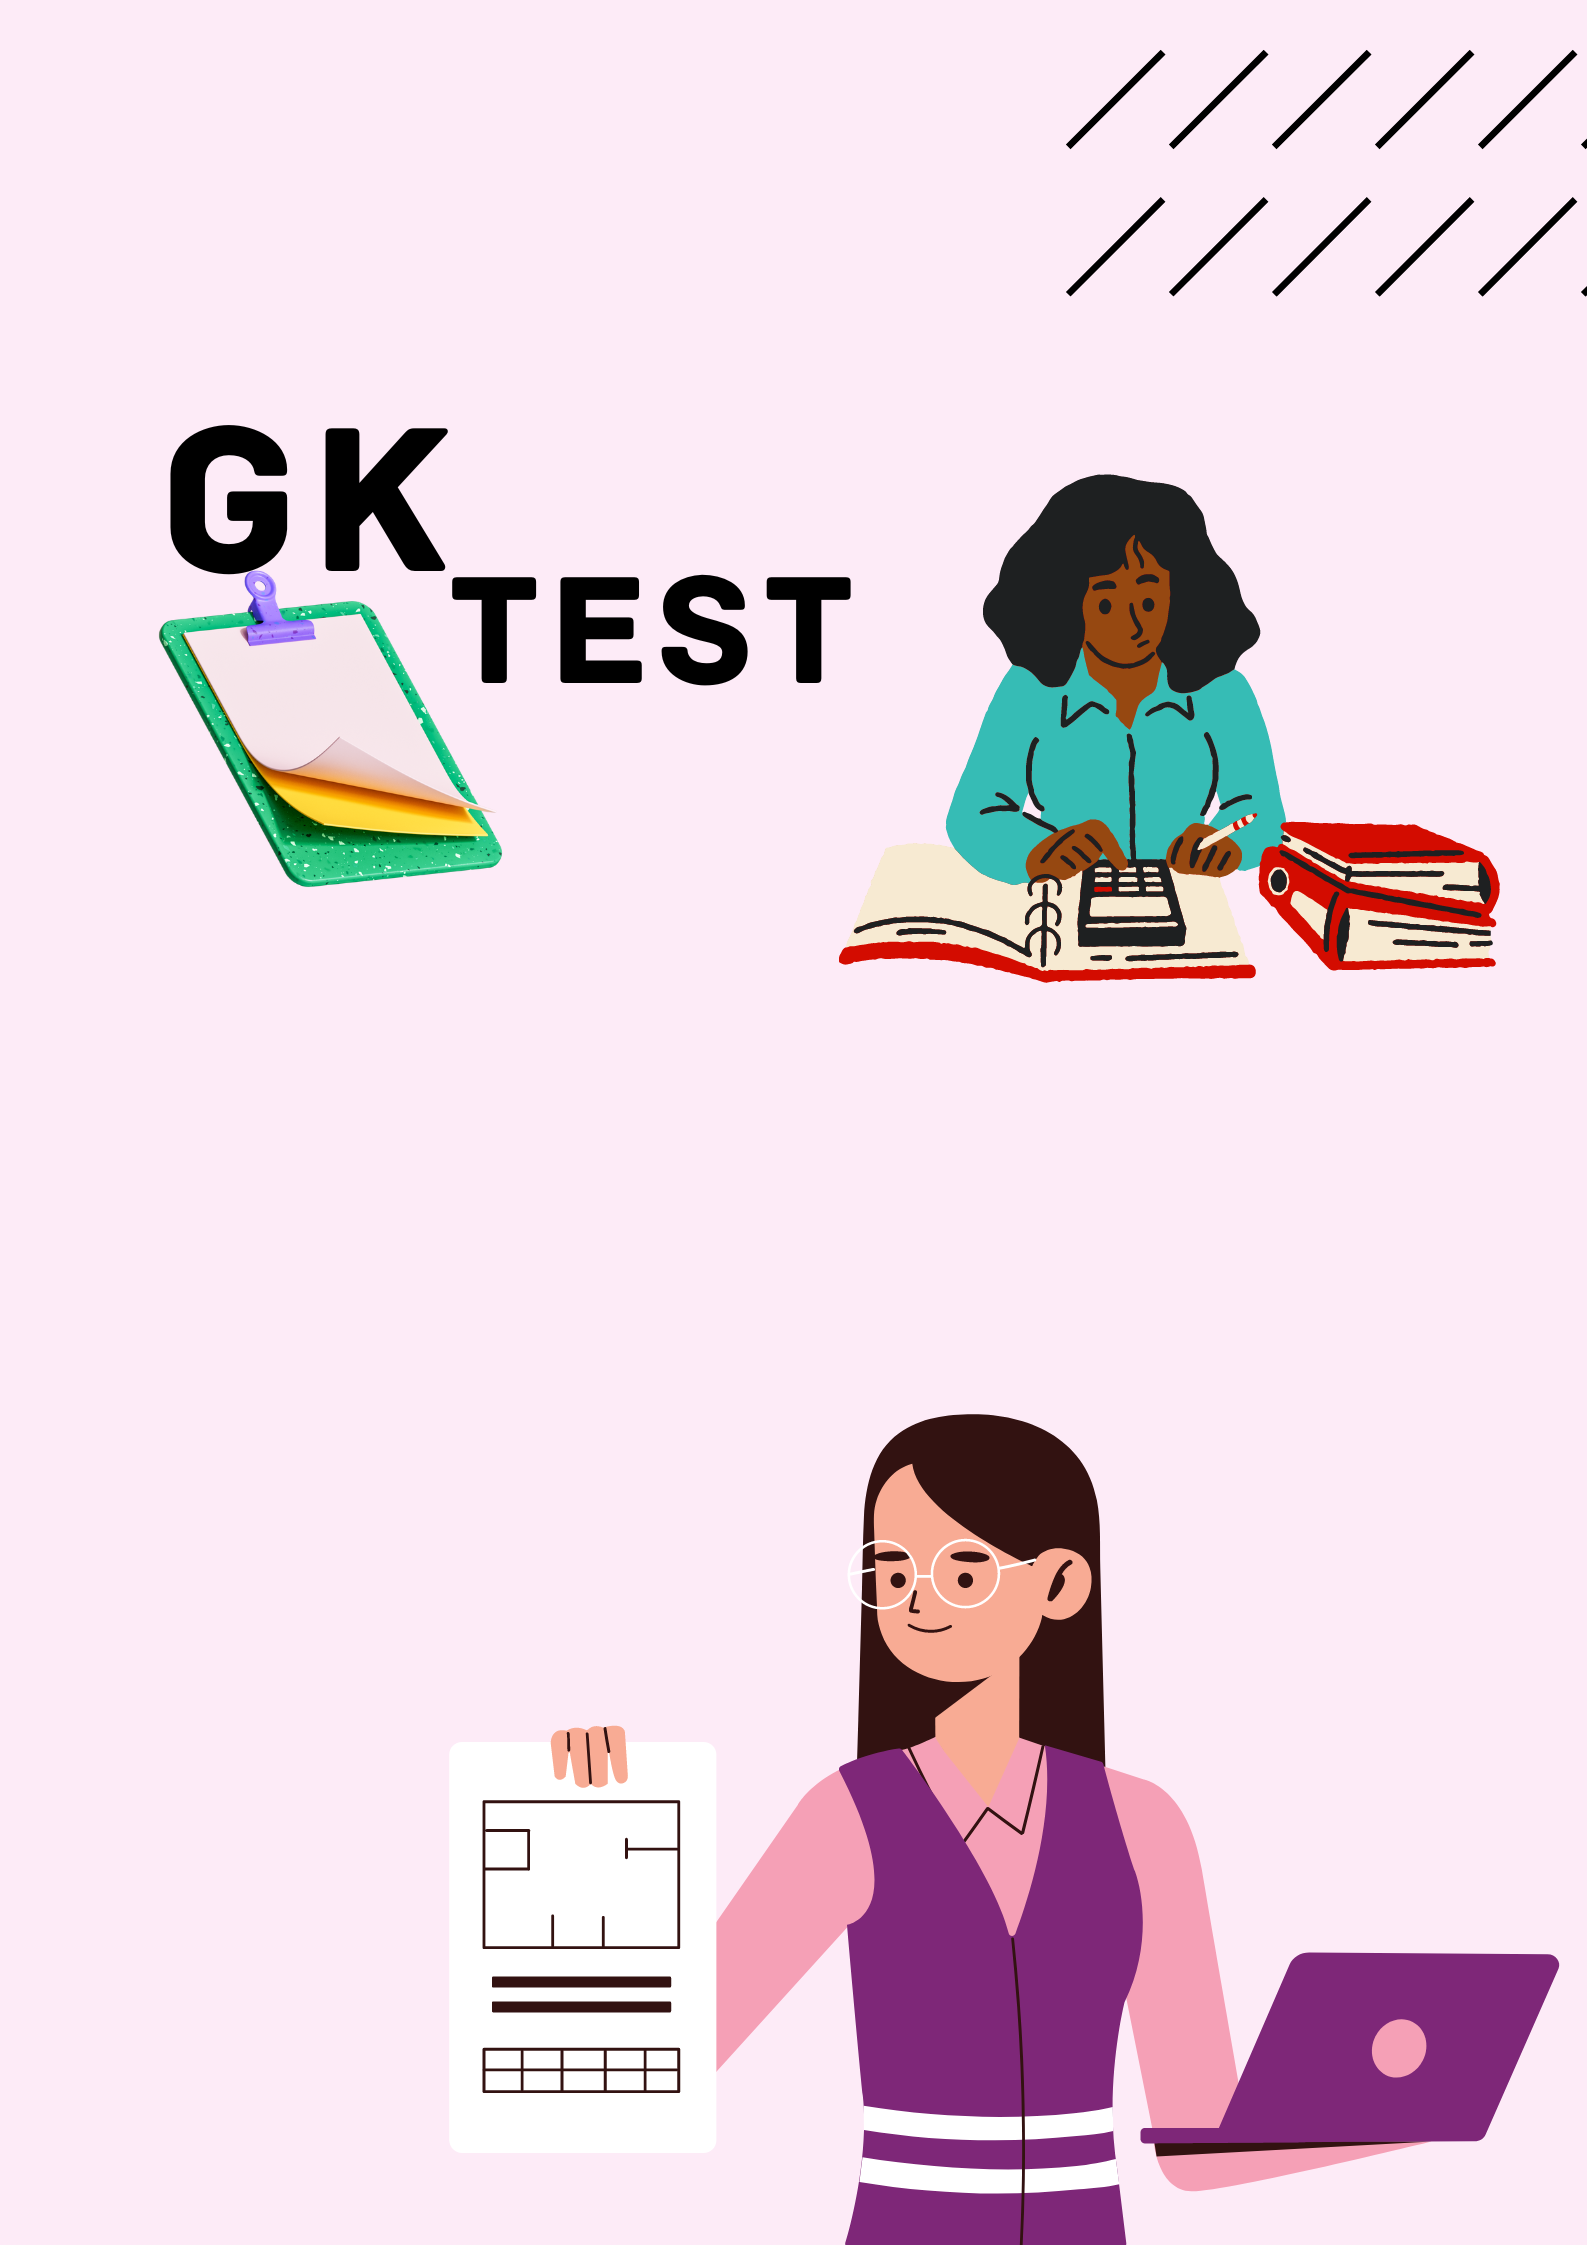 GK test in English